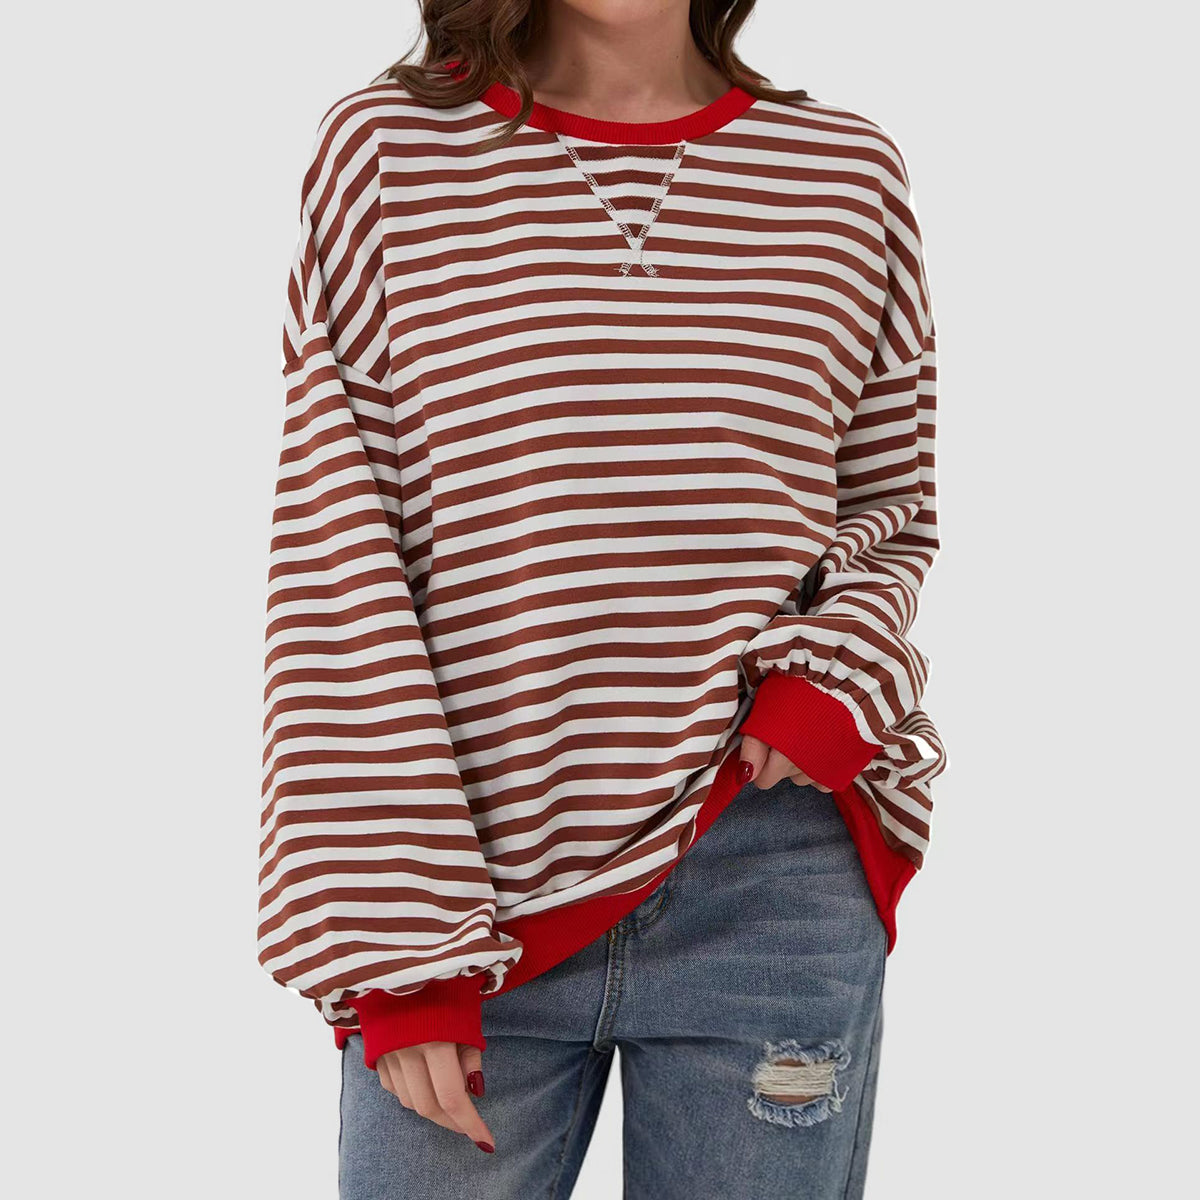 TEEK - Striped Round Neck Long Sleeve Shirt TOPS TEEK Trend Chestnut S 